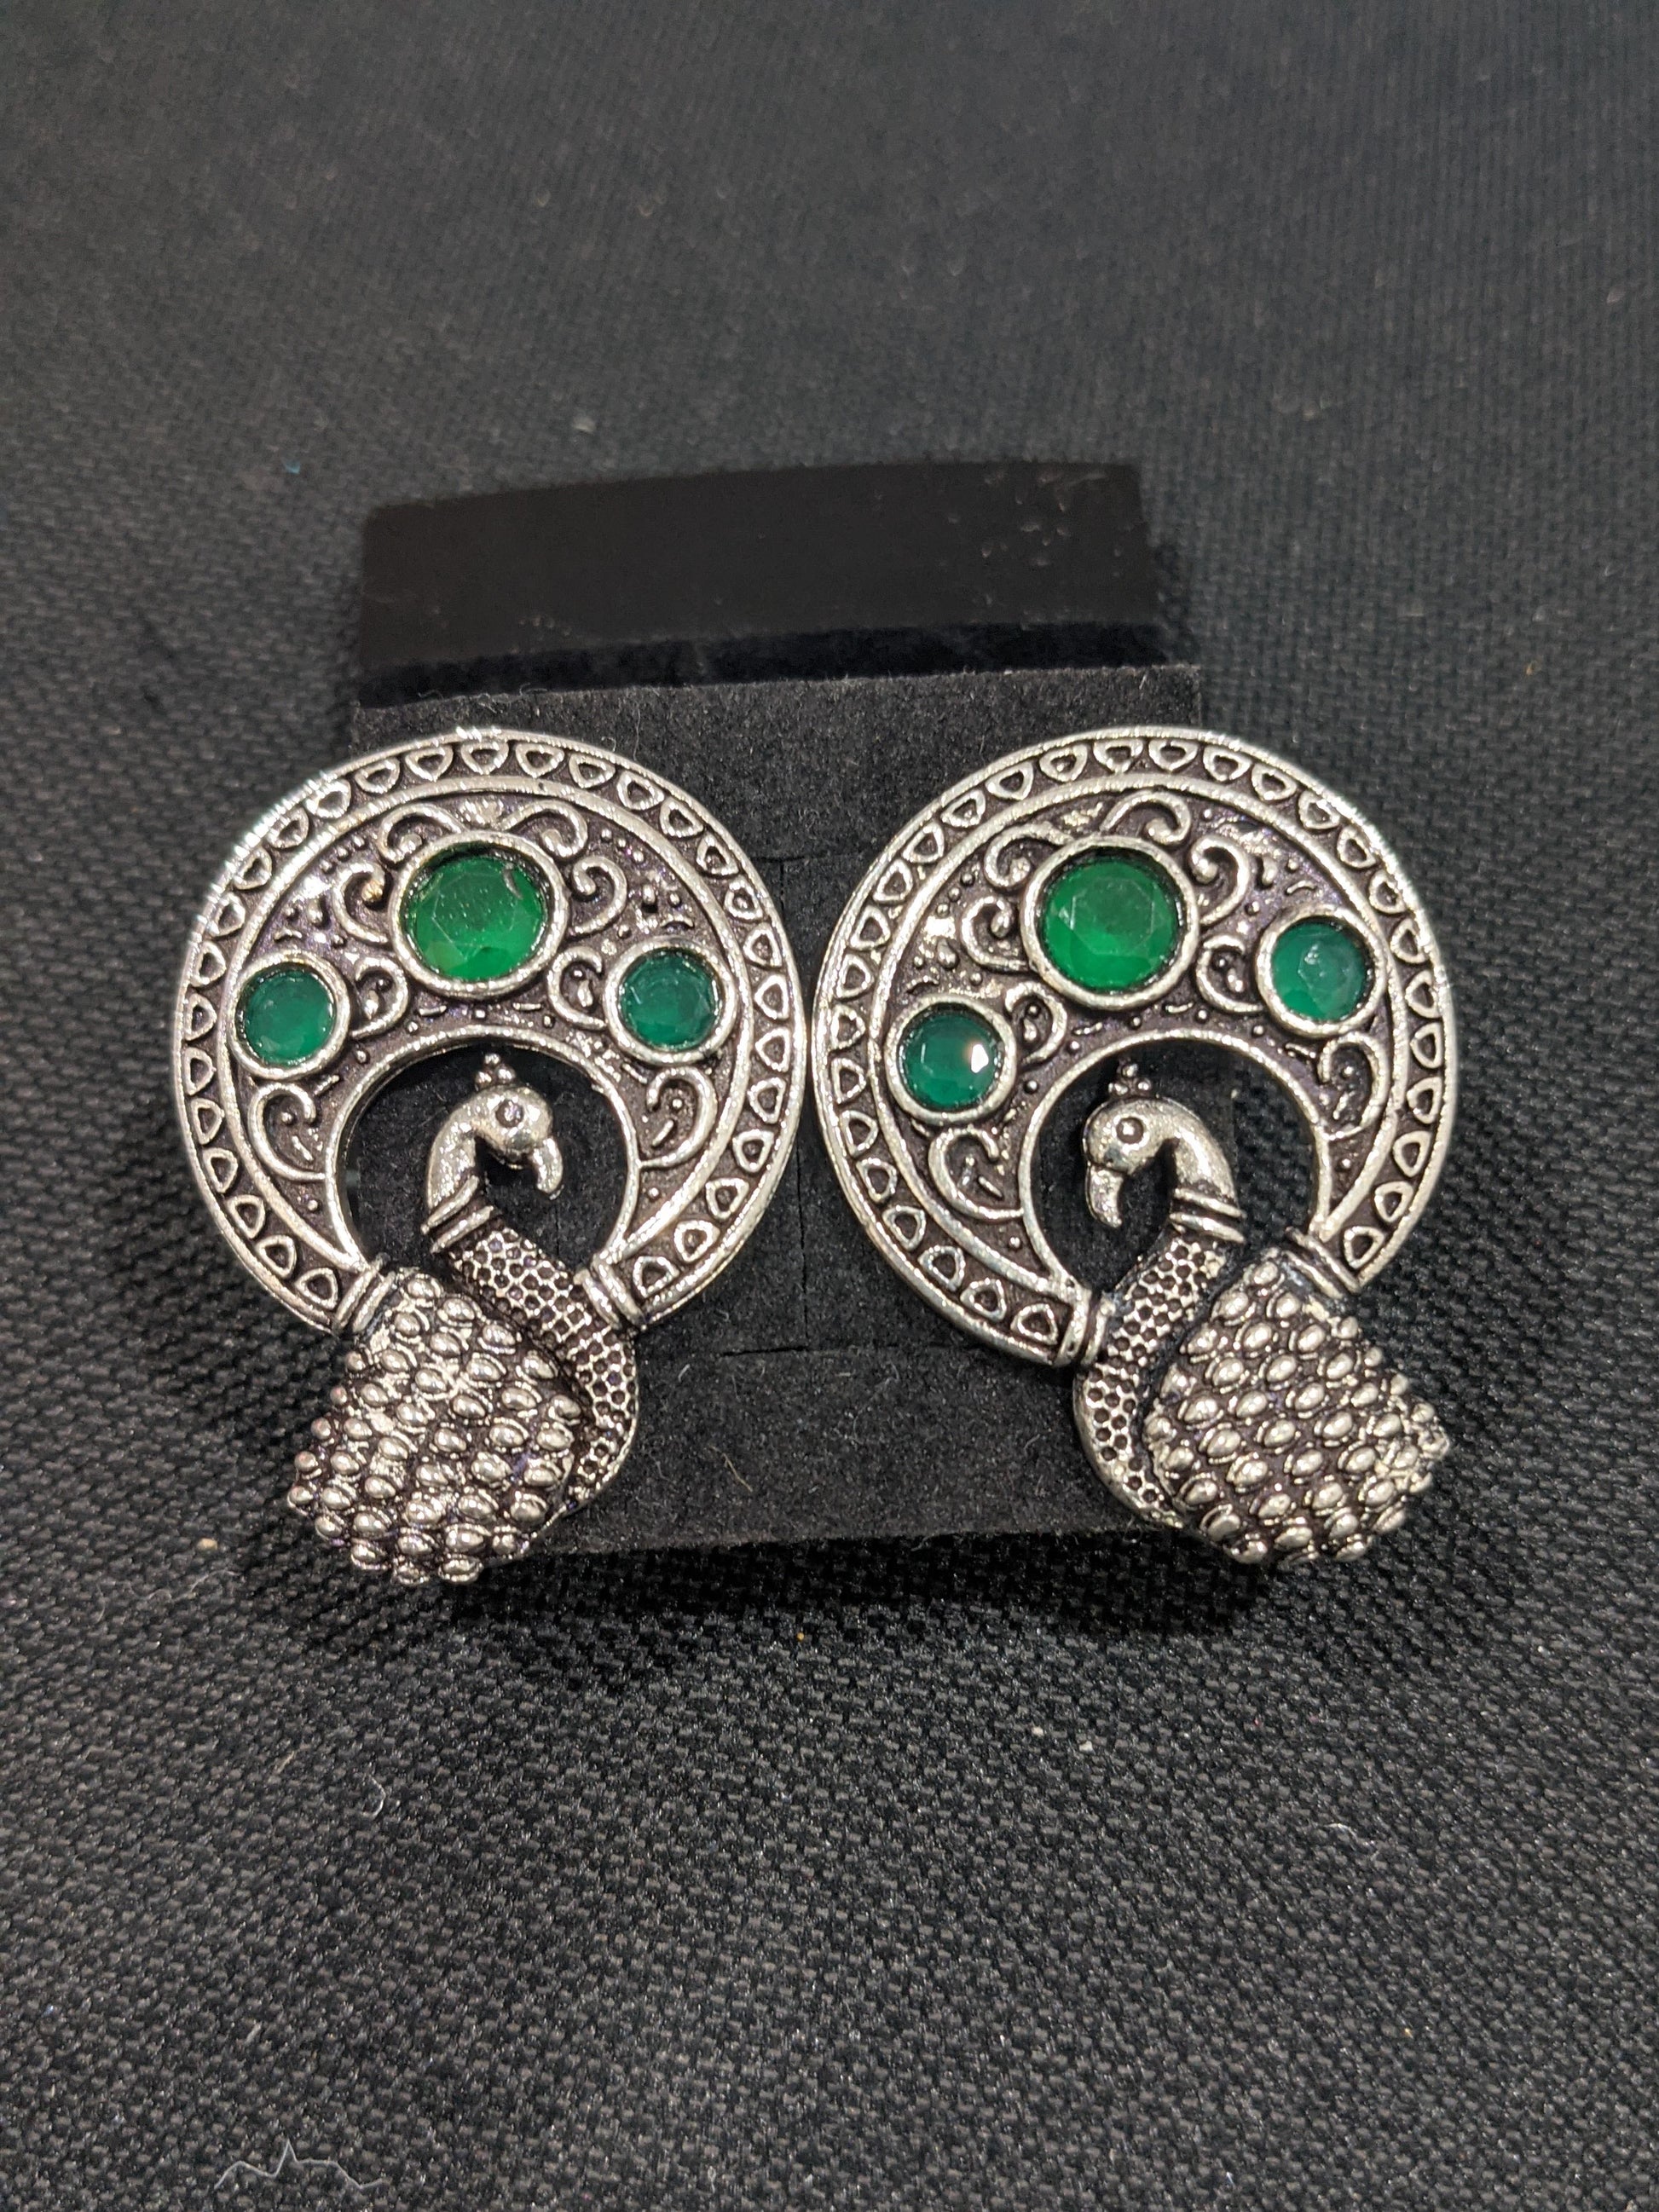 Oxidized Peacock large stud earrings - Simpliful